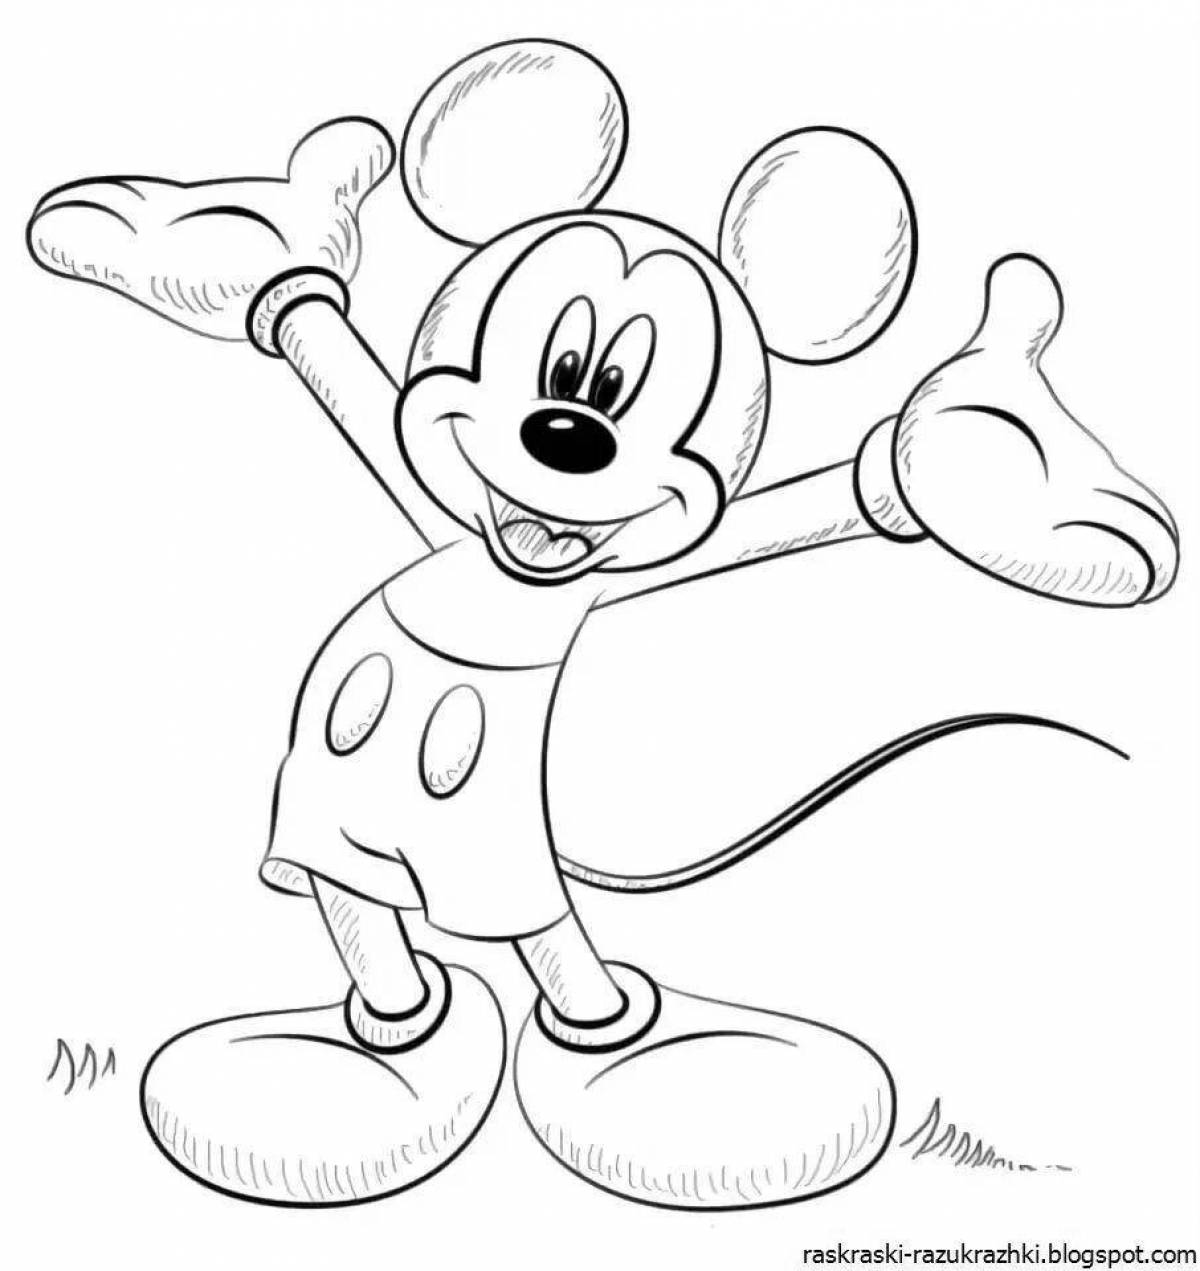 Cartoon mouse #4